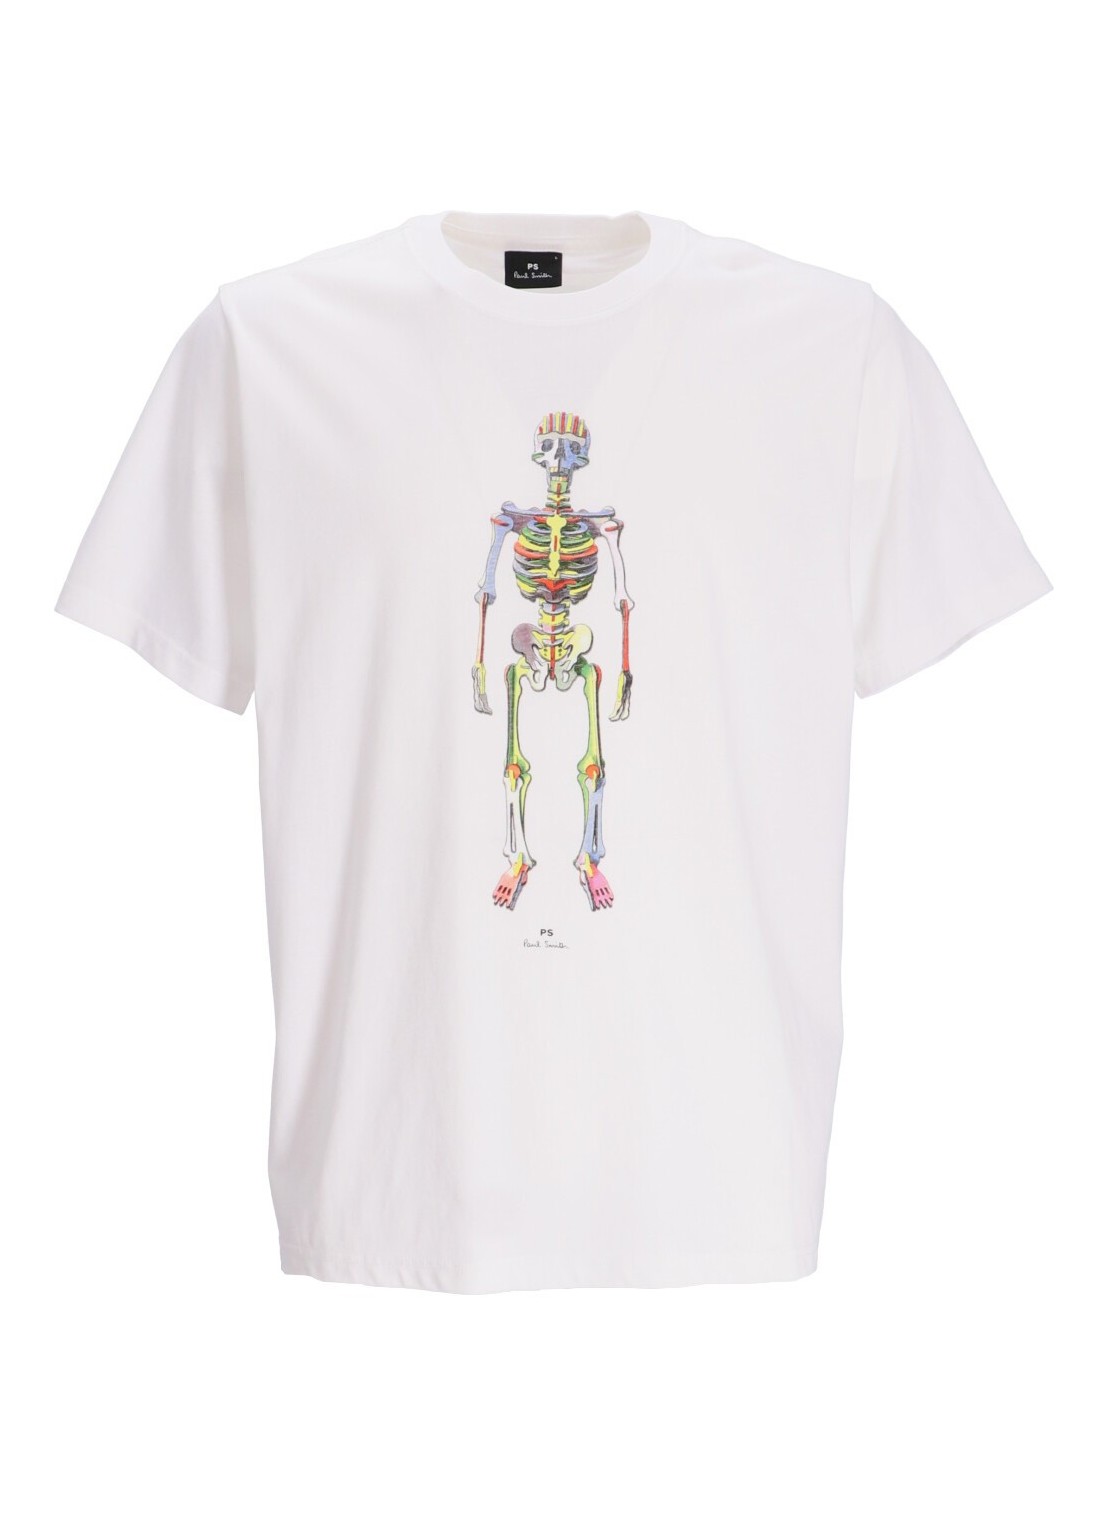 Camiseta ps mens reg fit t-shirt skeleton - m2r011rkp3722 01 talla L
 